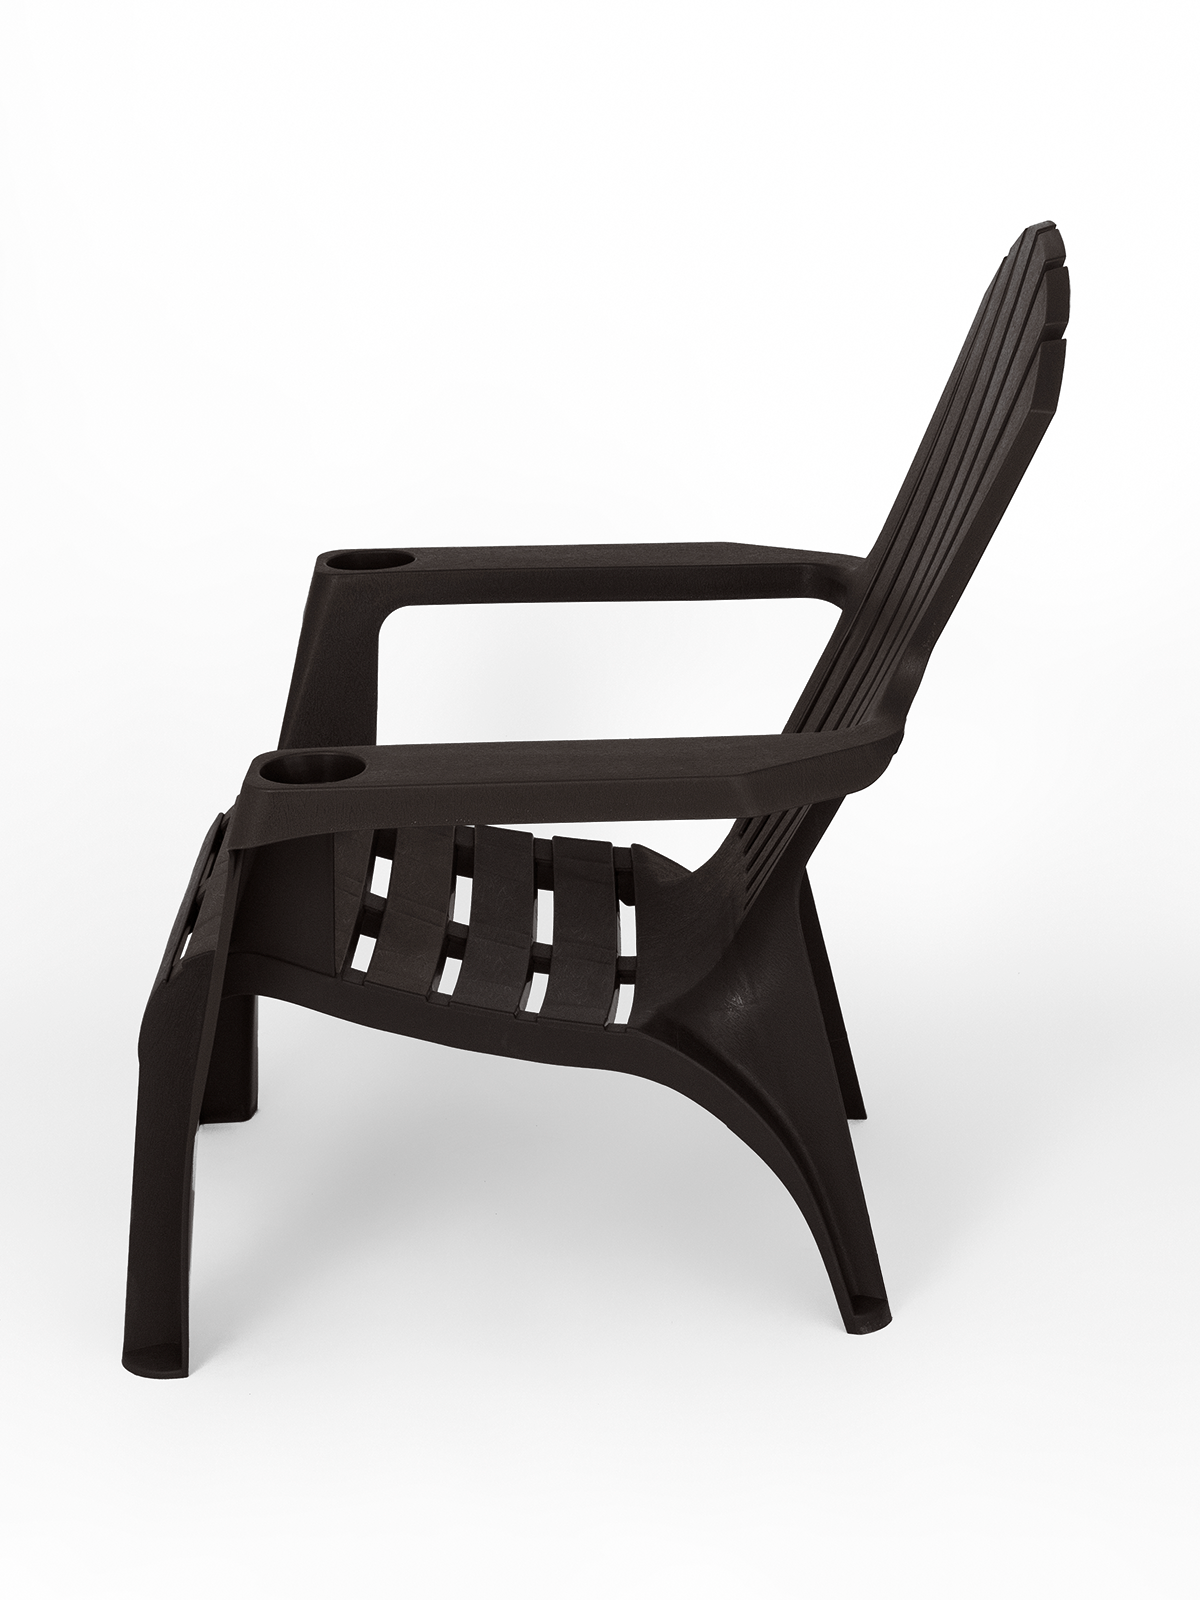 Кресло пластиковое Майами арт.М-GS02 (шоколад)